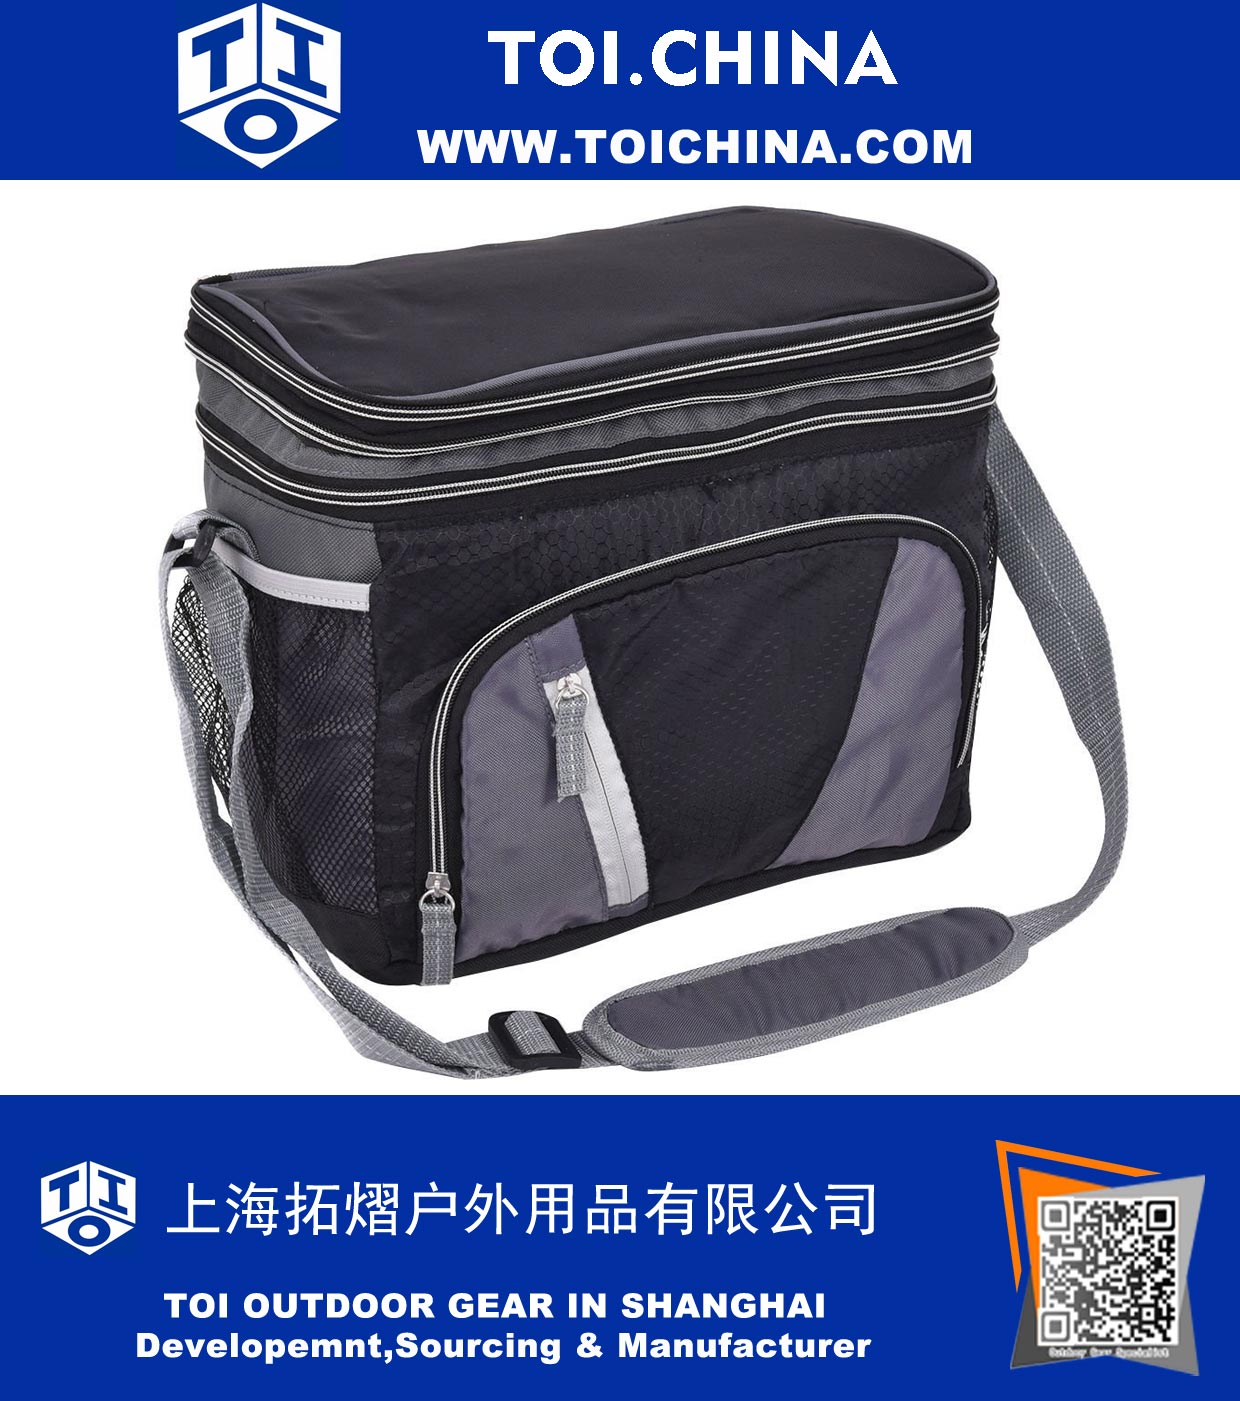 12 Может двухслойный кулер сумка Ice Pack Lunch Container Zipper наплечные ремни